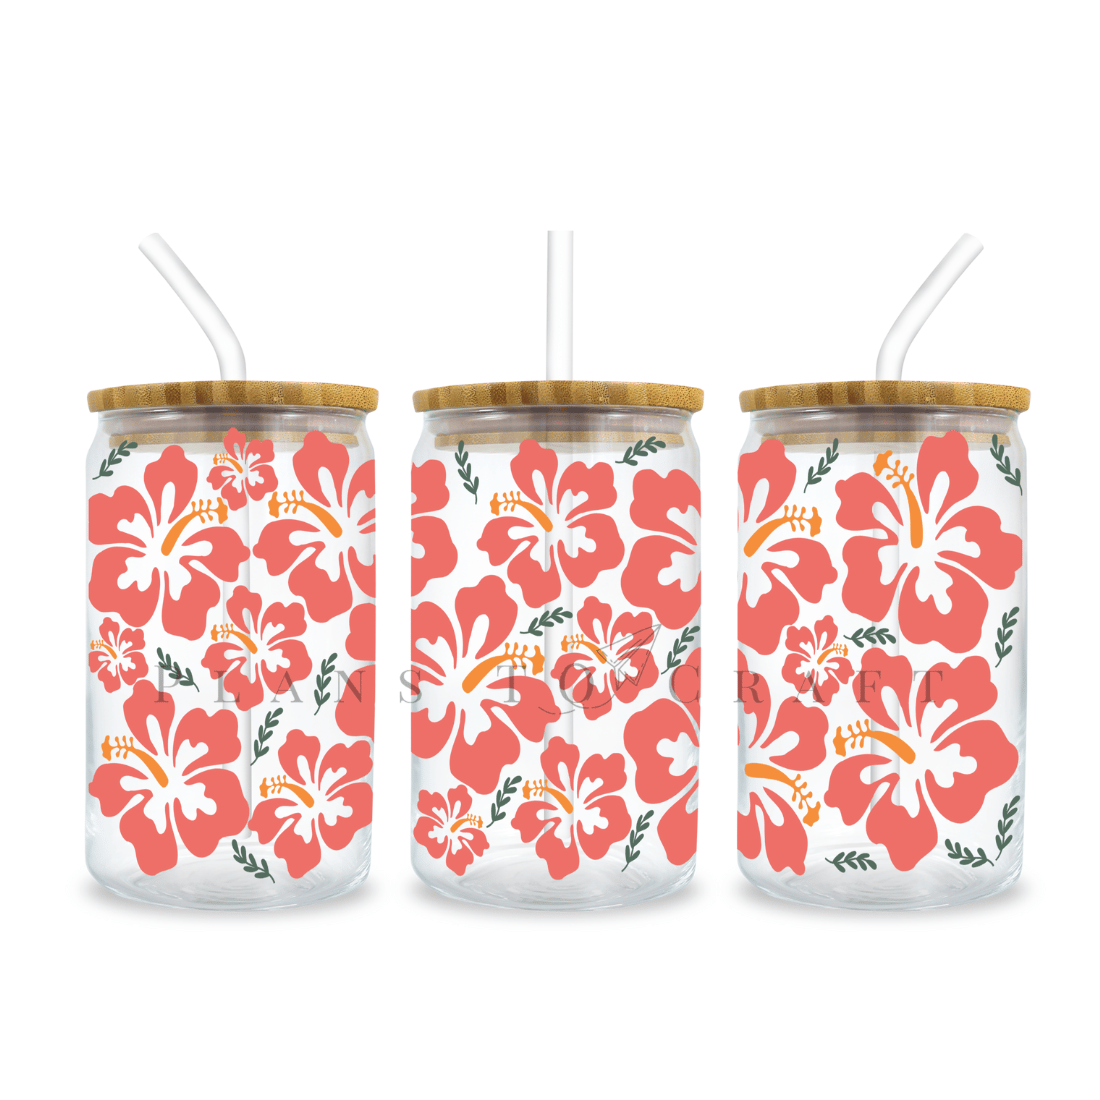 Set of three mason jars with floral designs.